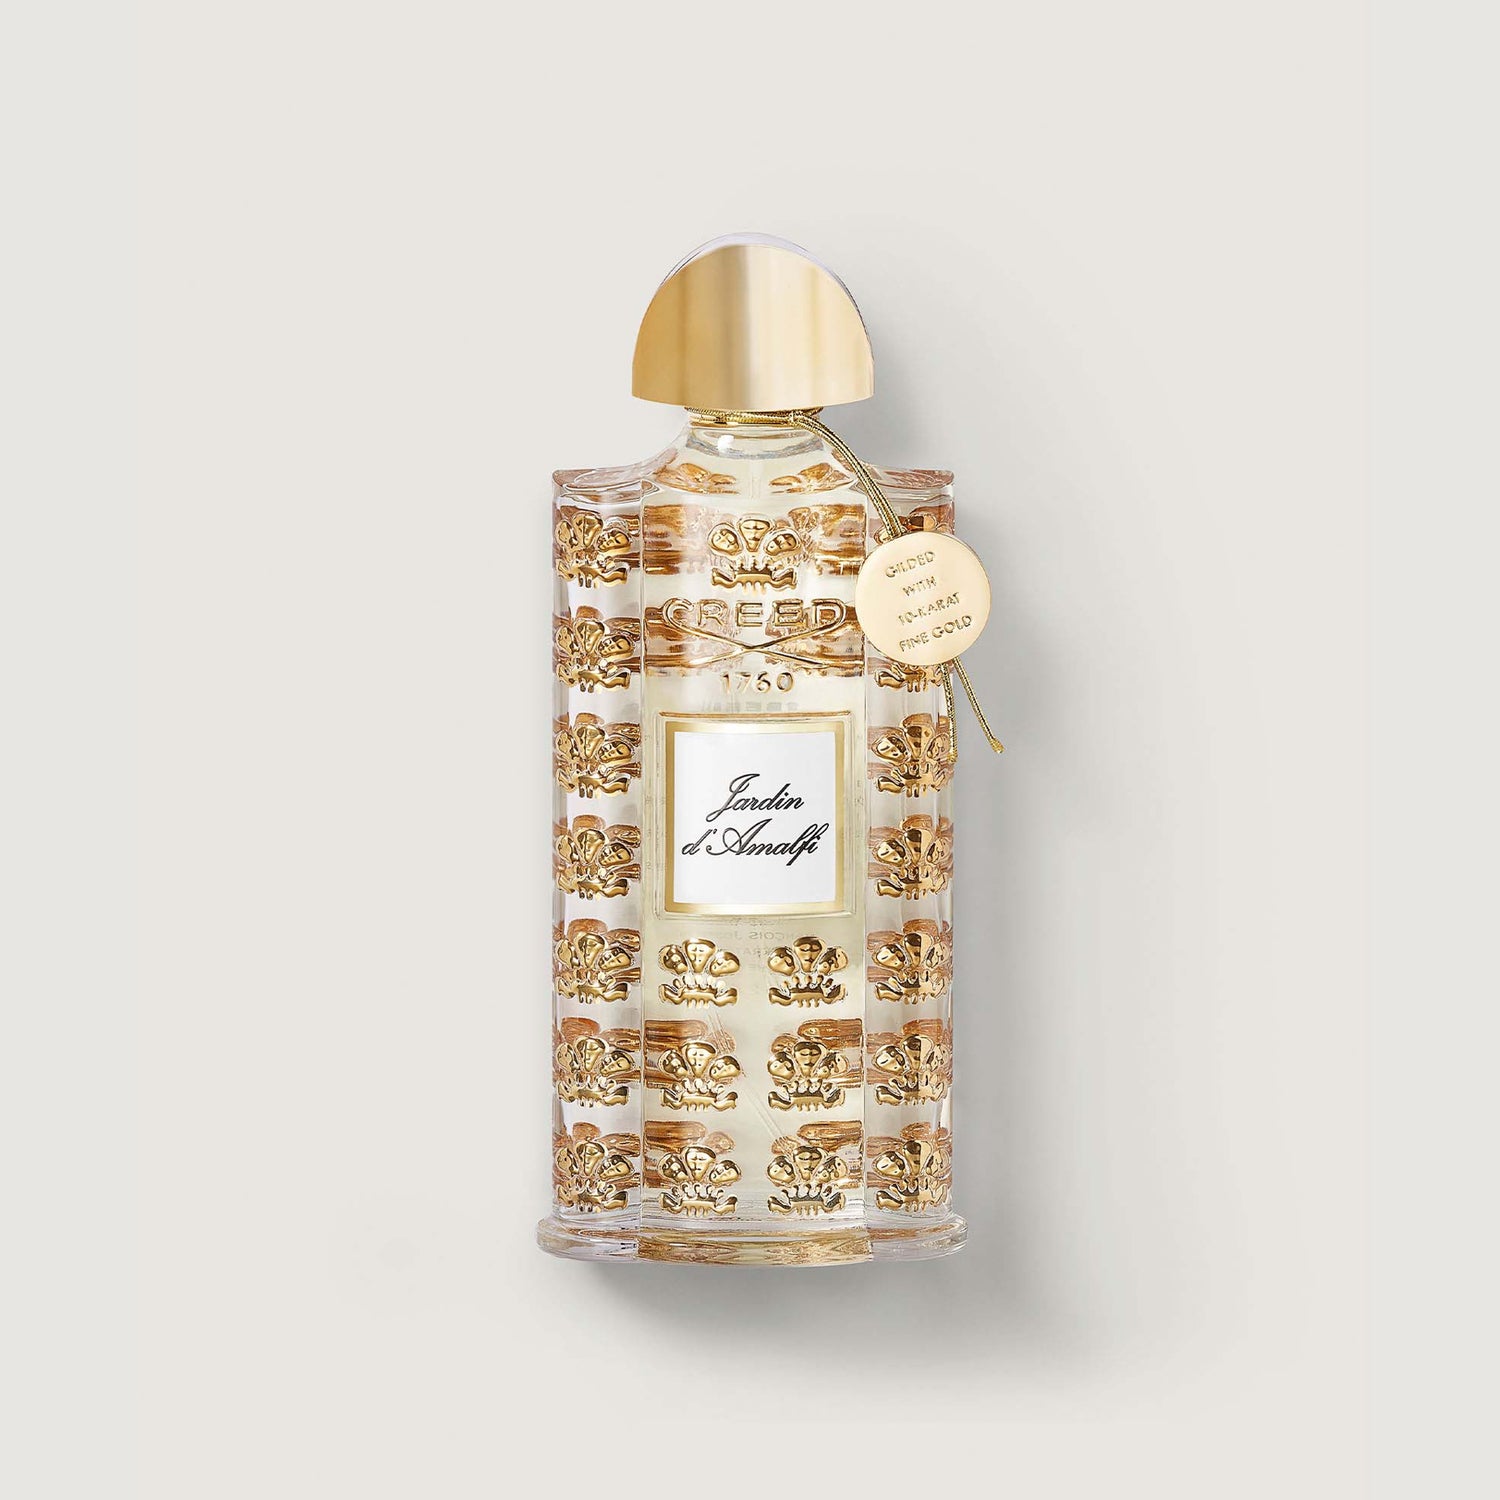 Gold Bag Perfume Glam Birthday Card 